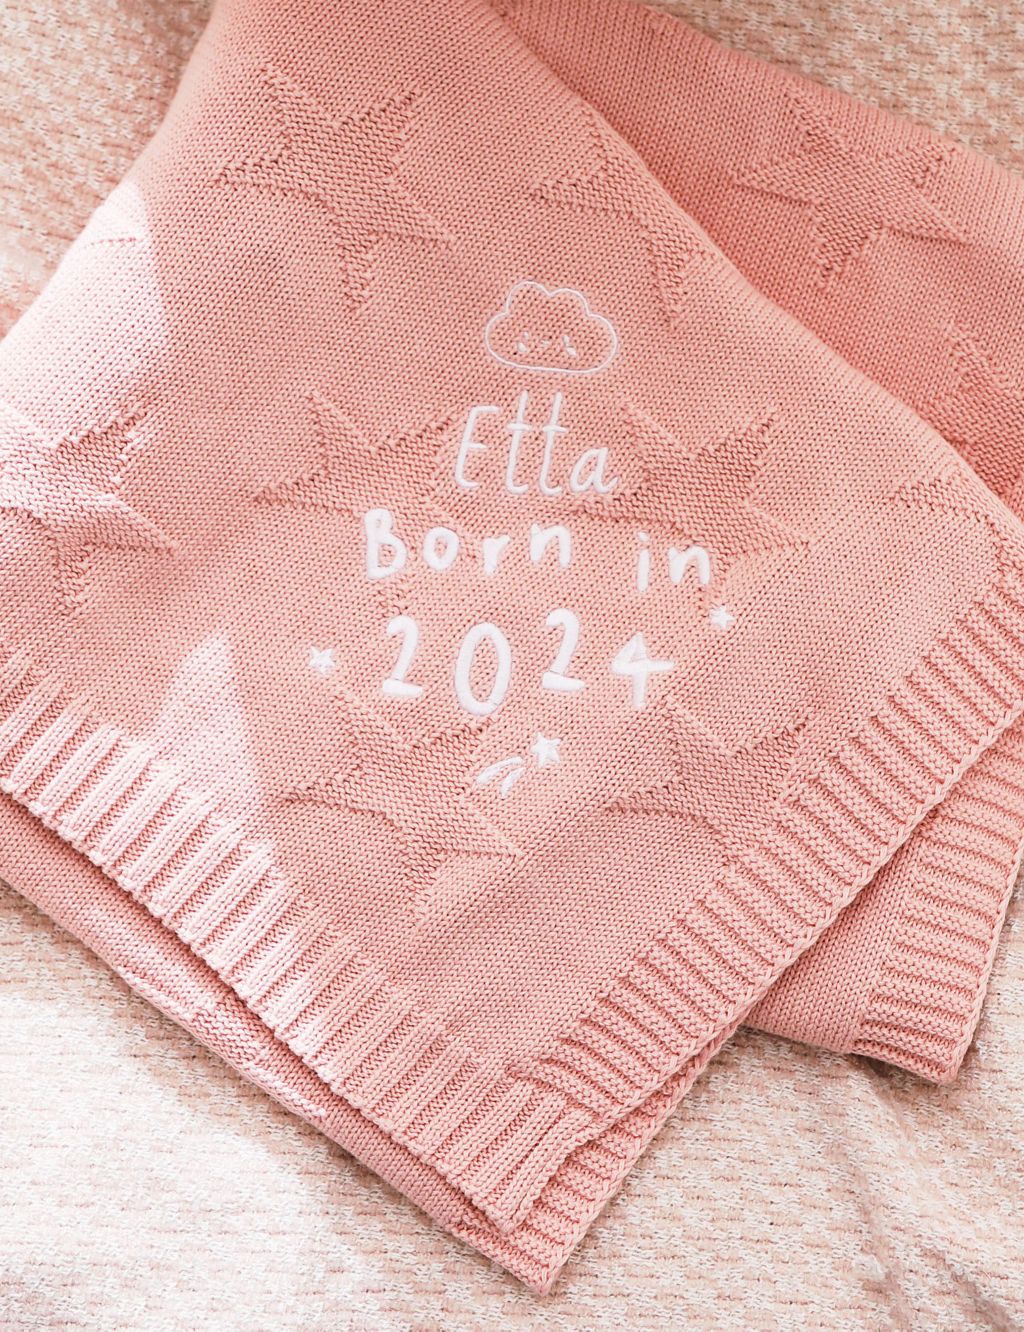 Personalised Born in 2024 Pink Star Jacquard Blanket